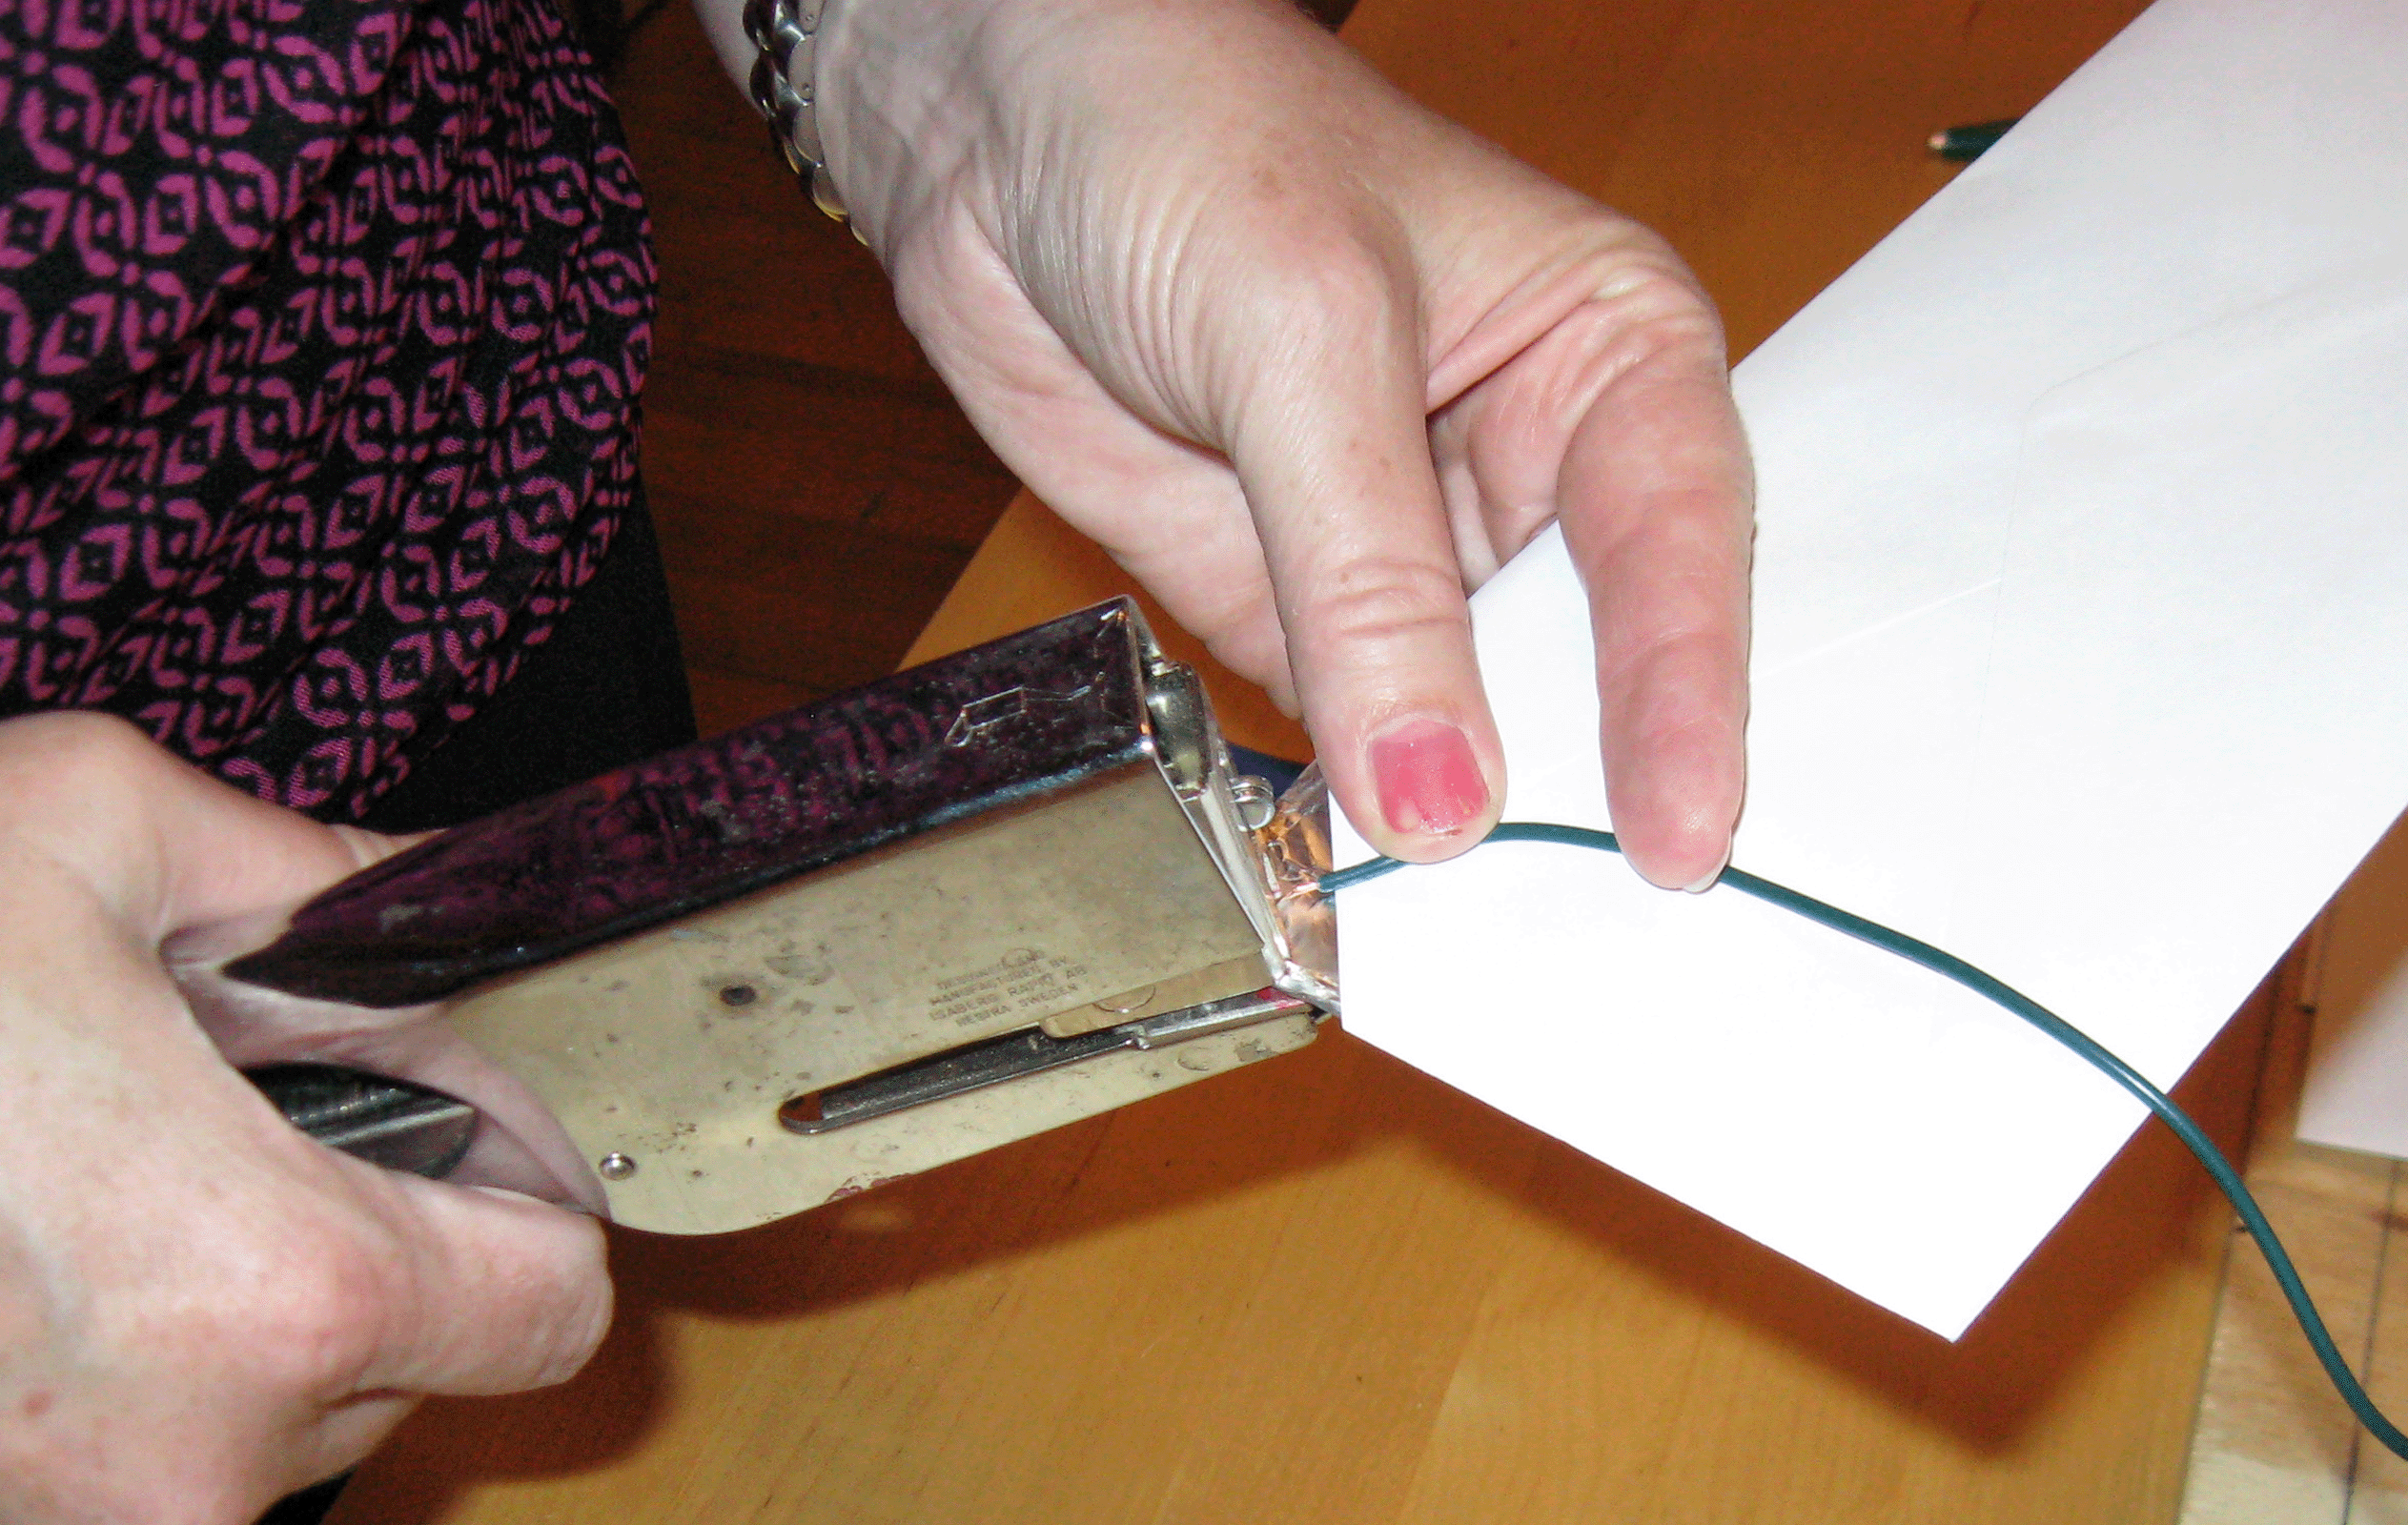 stapleing the Rotor